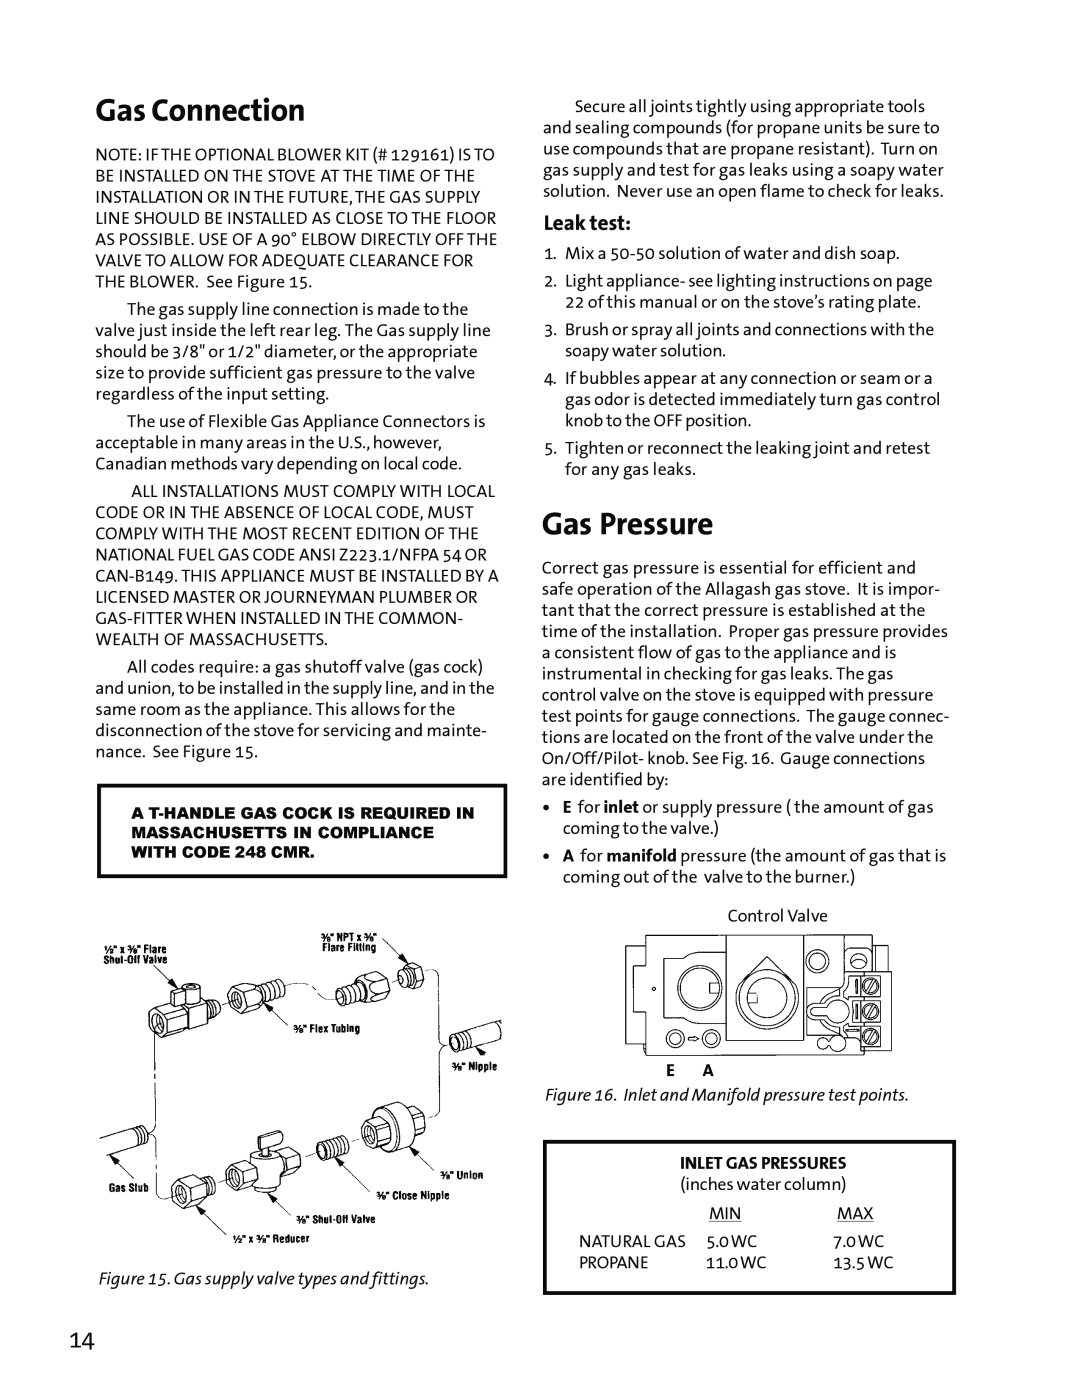 Jotul GF3 DVII manual Gas Connection, Gas Pressure, Leak test 